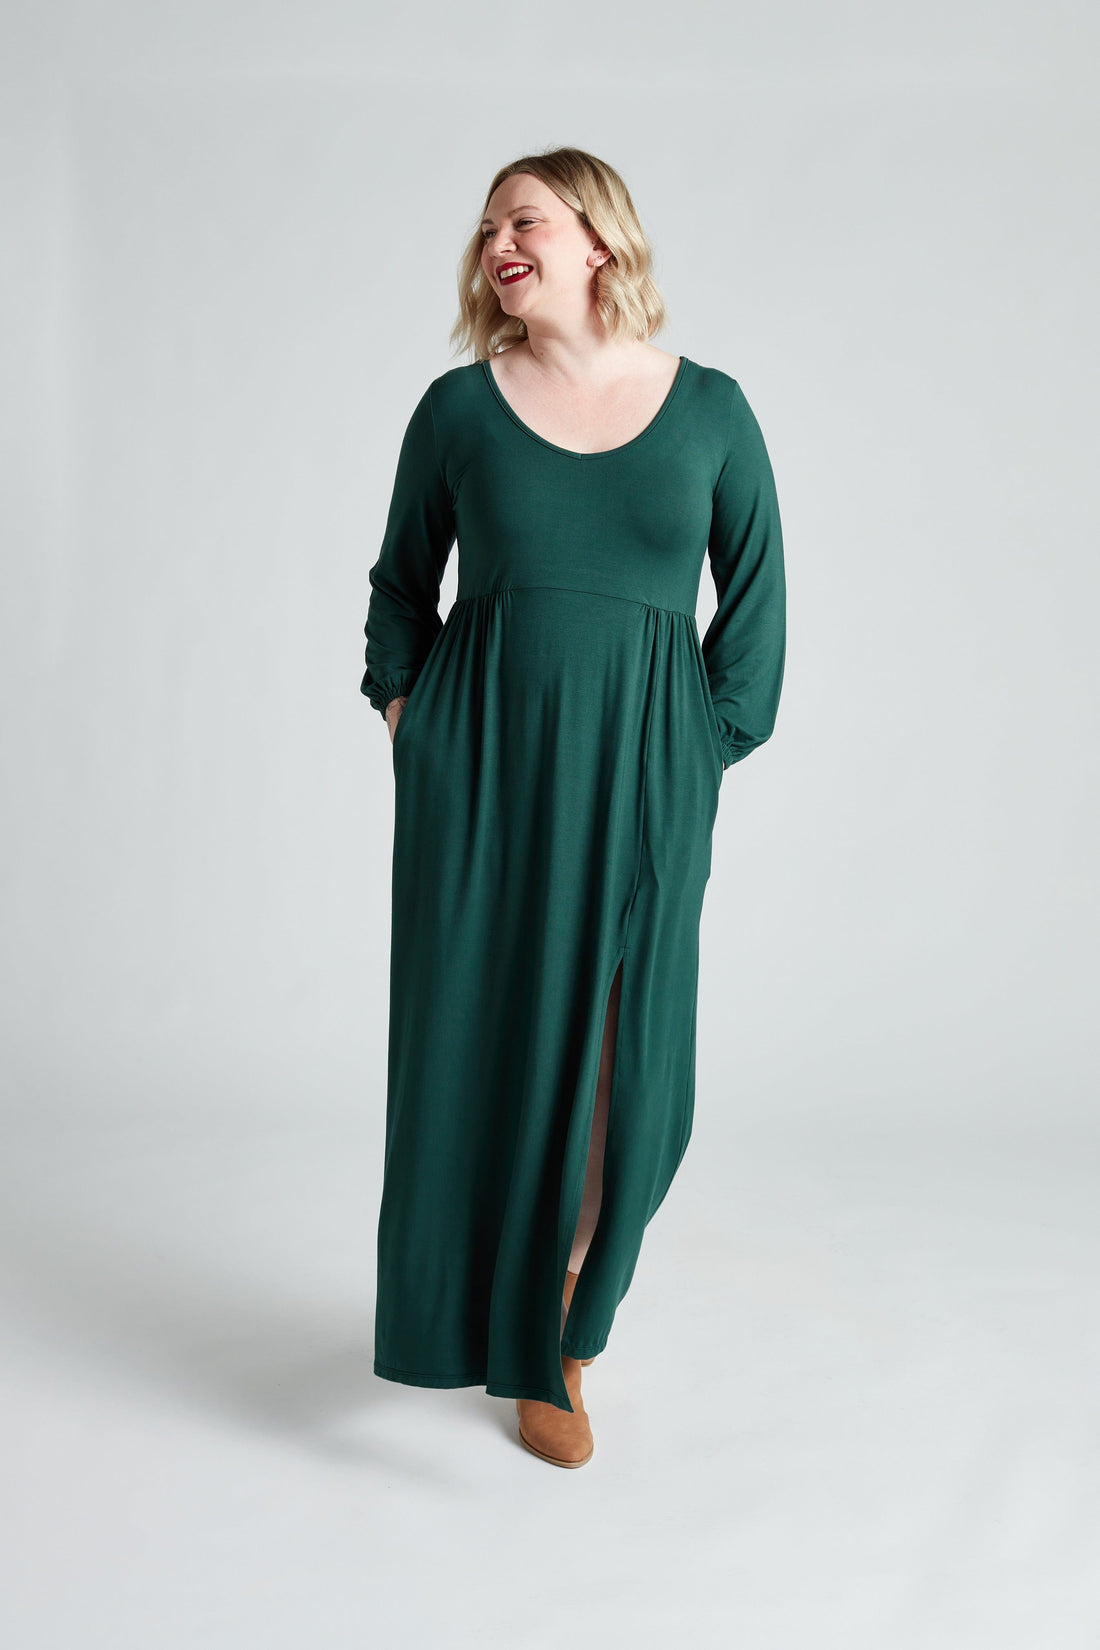 Smocked Sleeve Maxi Dress in Fern